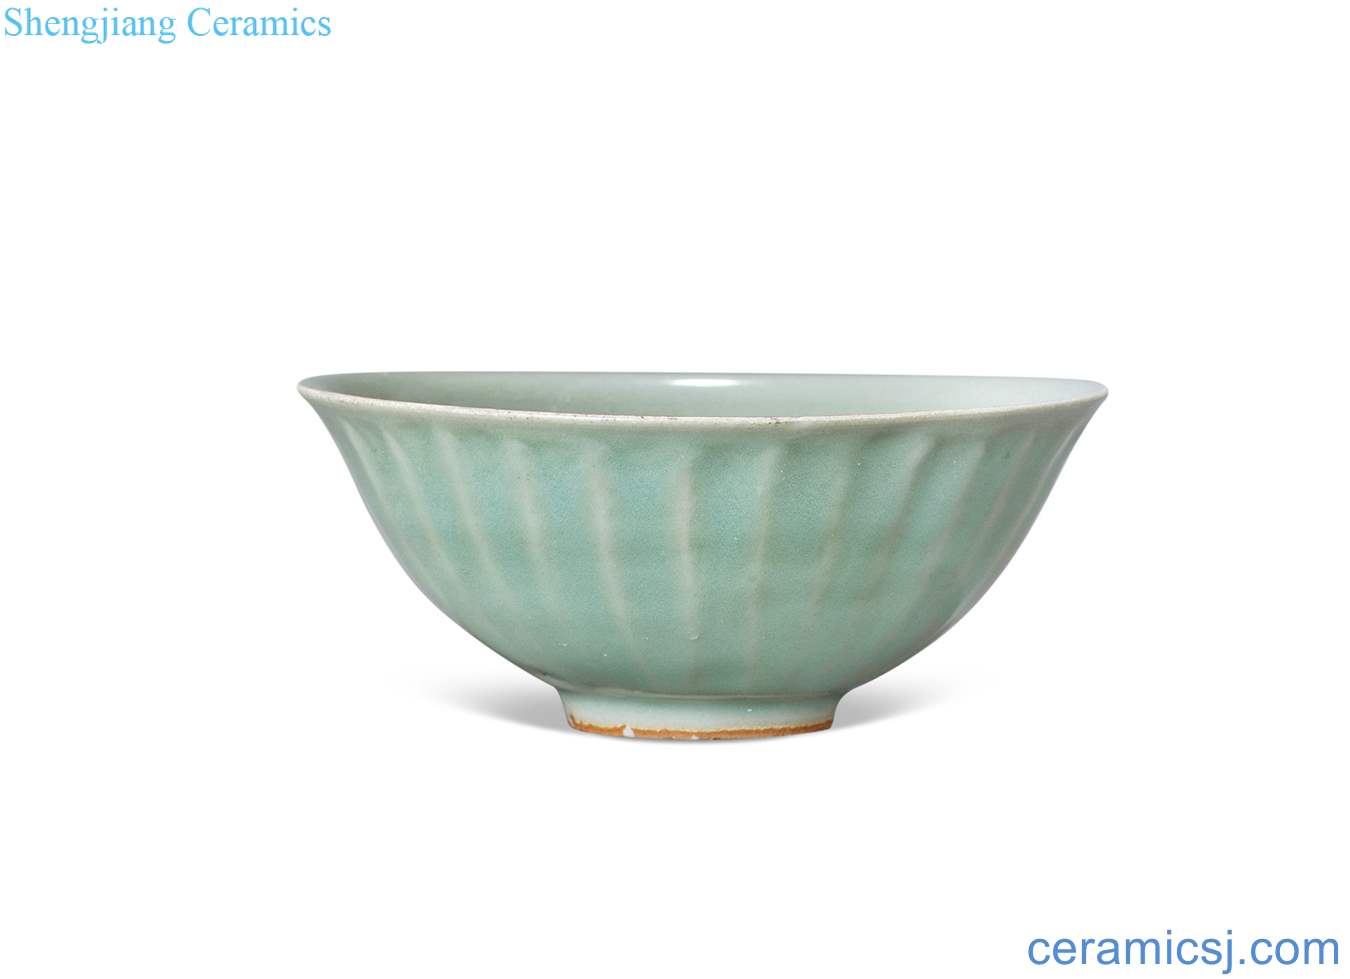 The southern song dynasty Longquan celadon glaze lotus pattern bowl